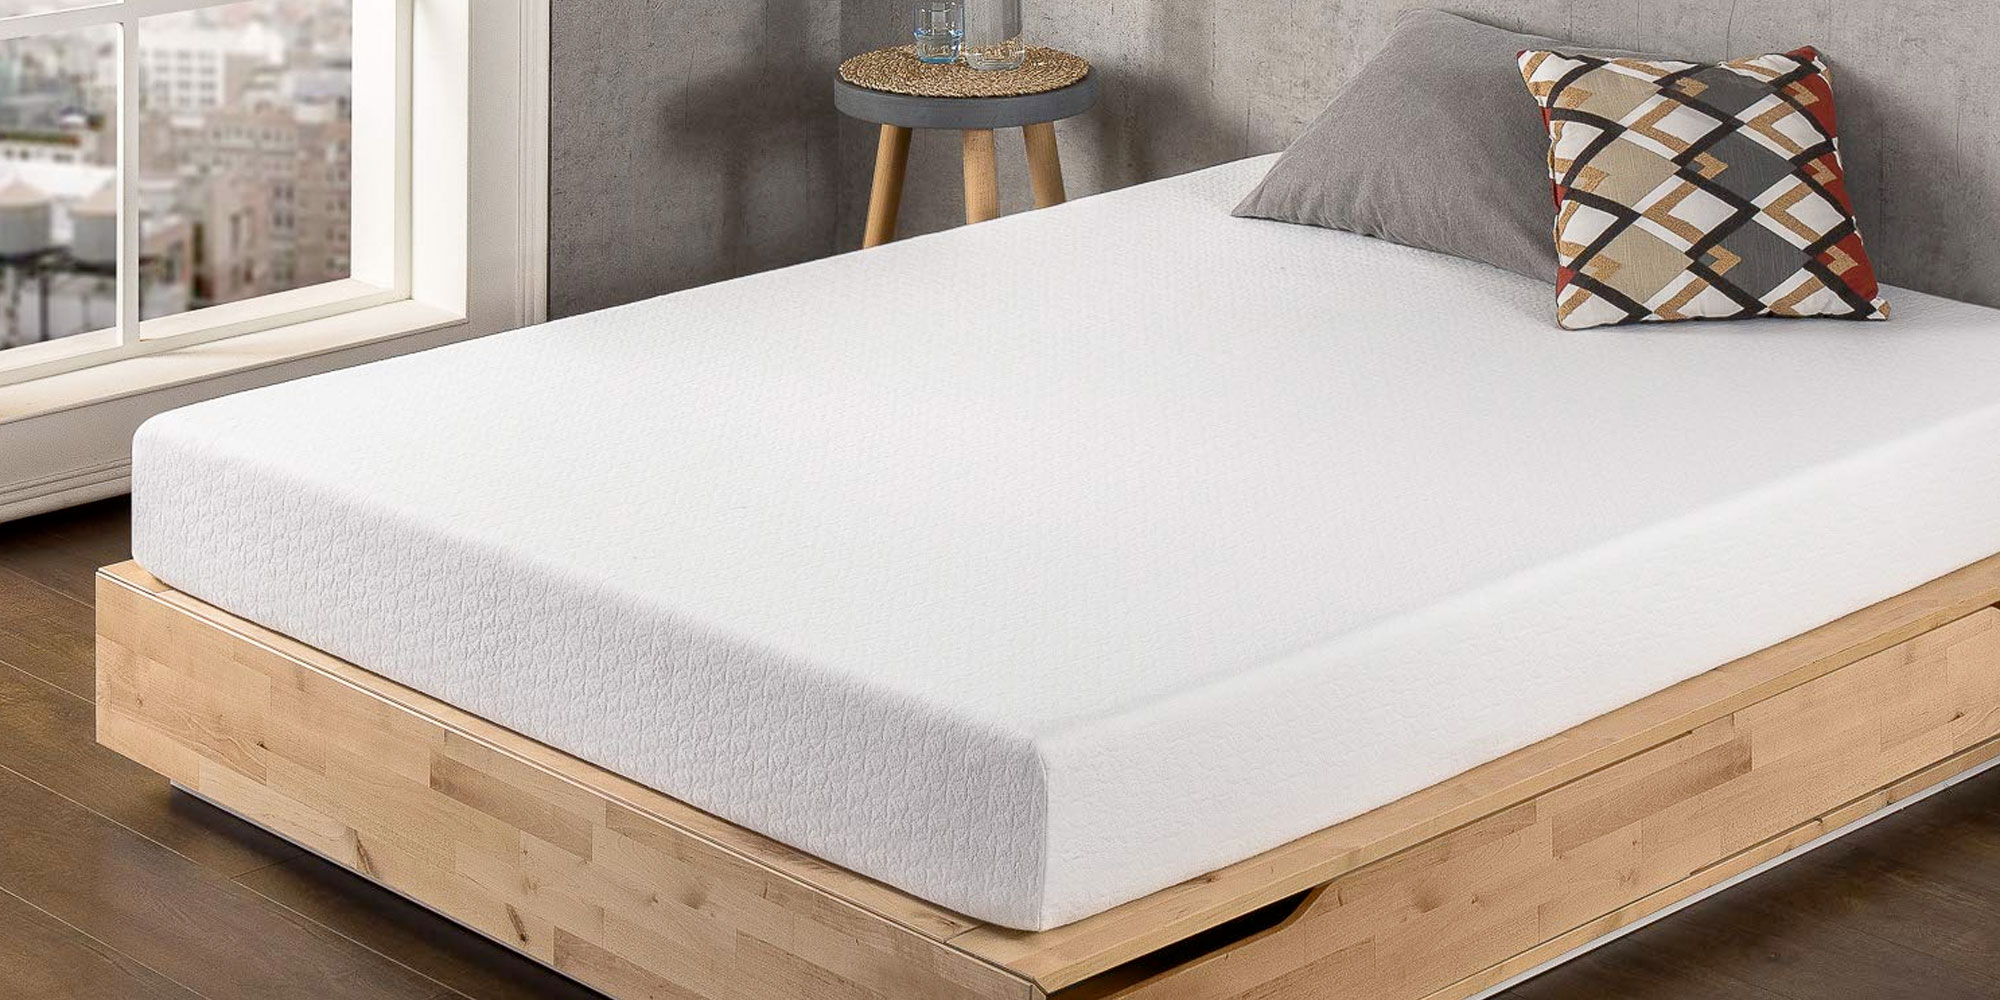 best price 8-inch memory foam mattress